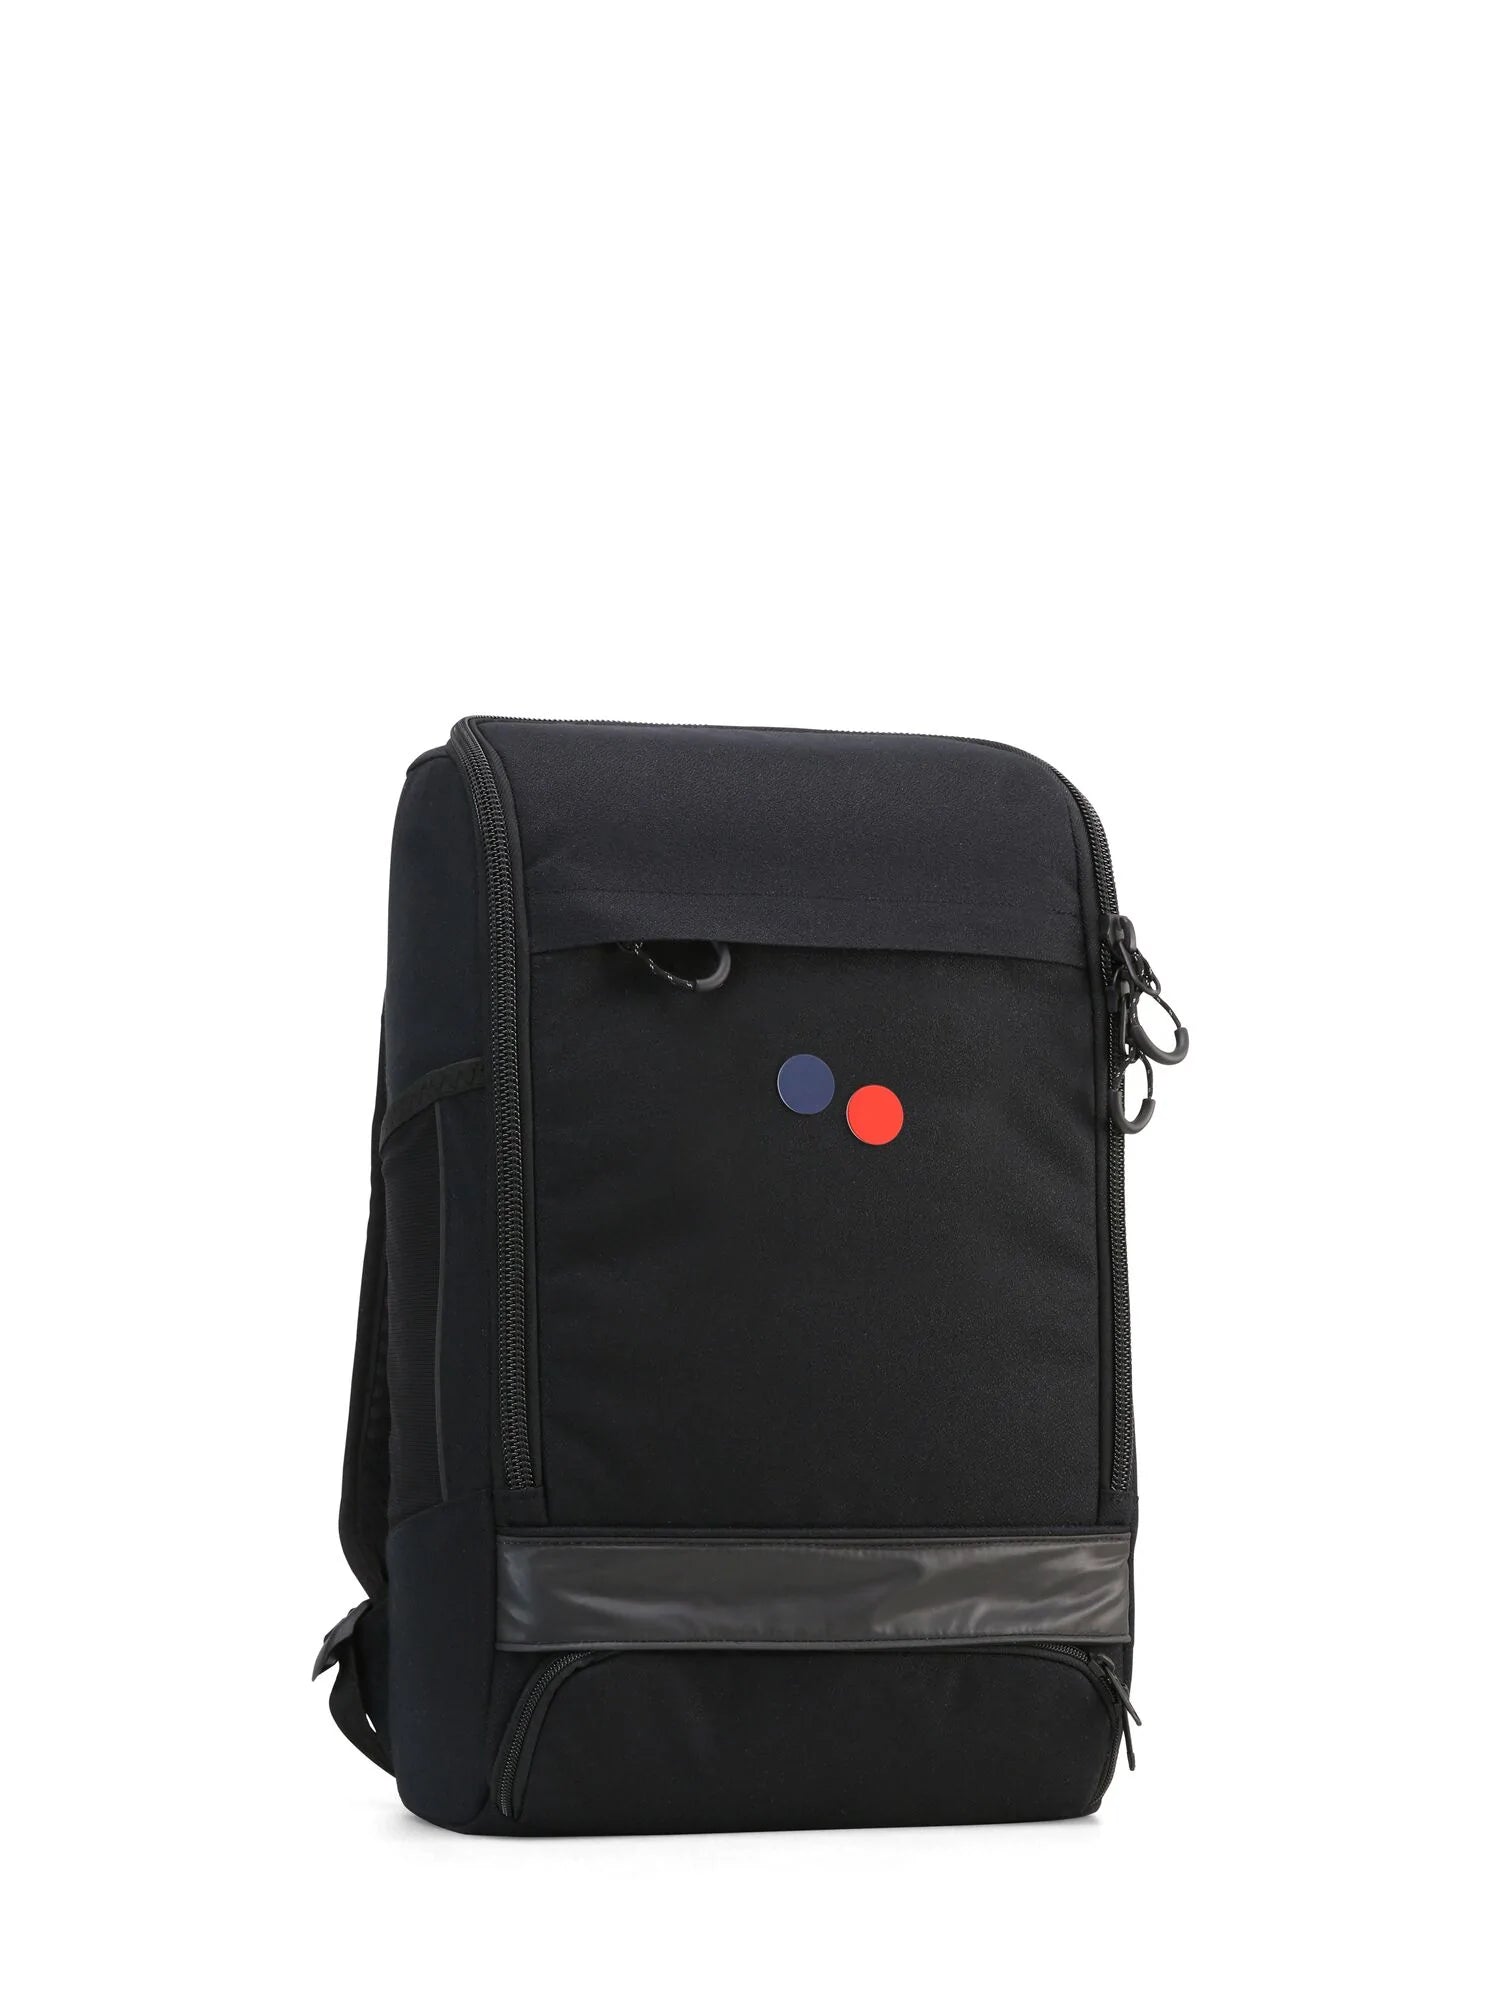 Cubik Medium Backpack Licorice Black Farbe: licorice b